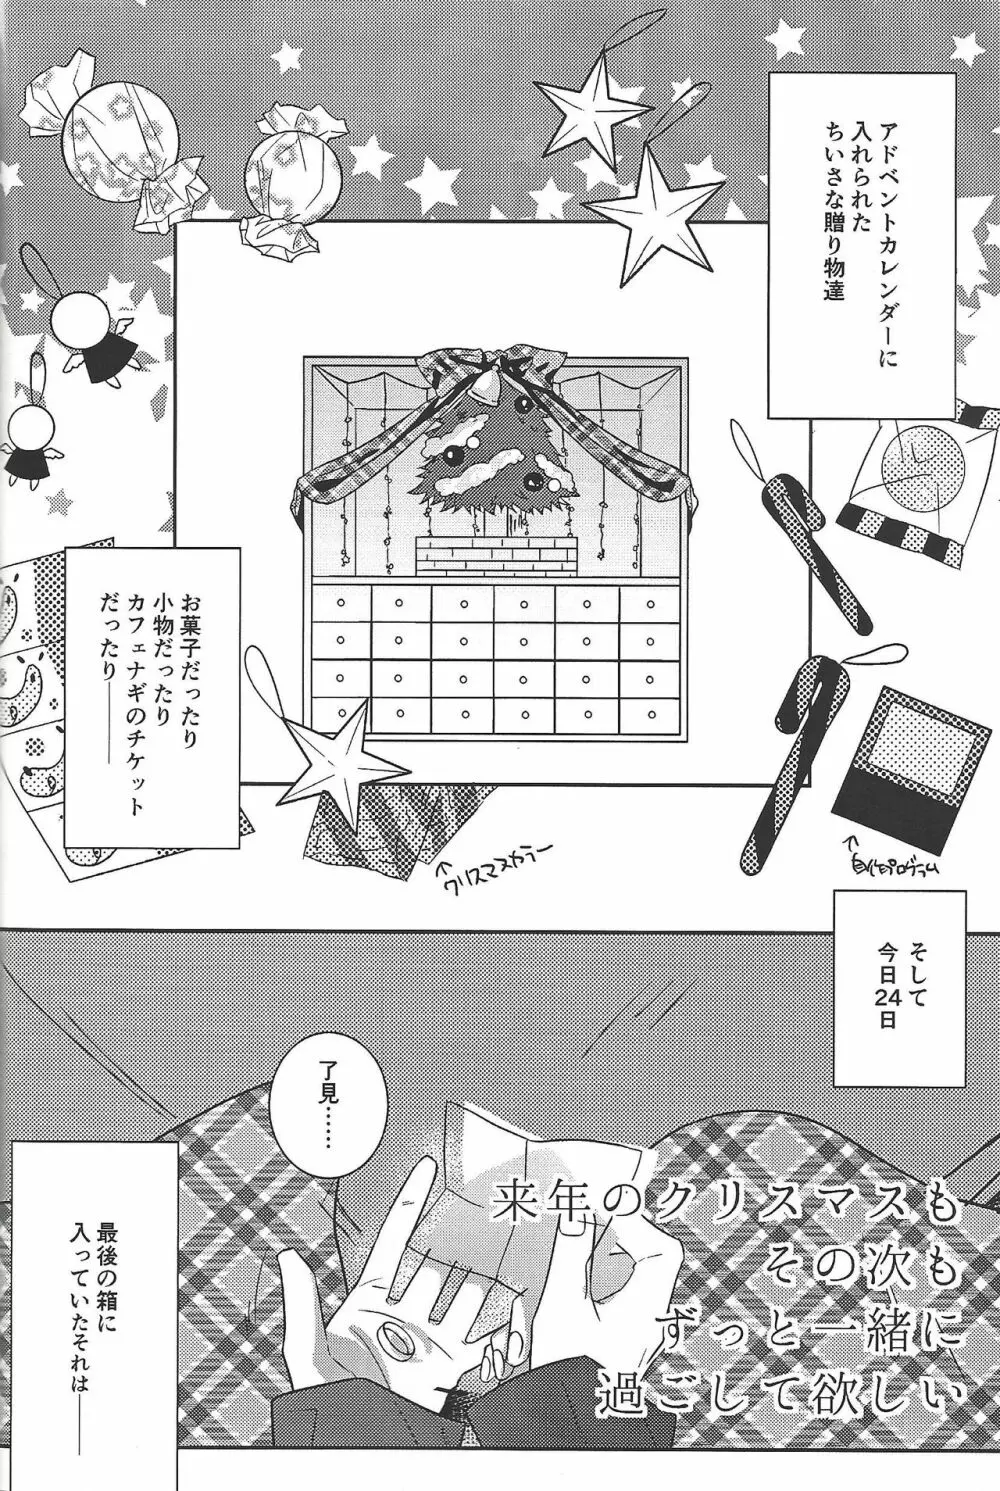 Kyō no RyōYū-chan ekusutora. 59ページ